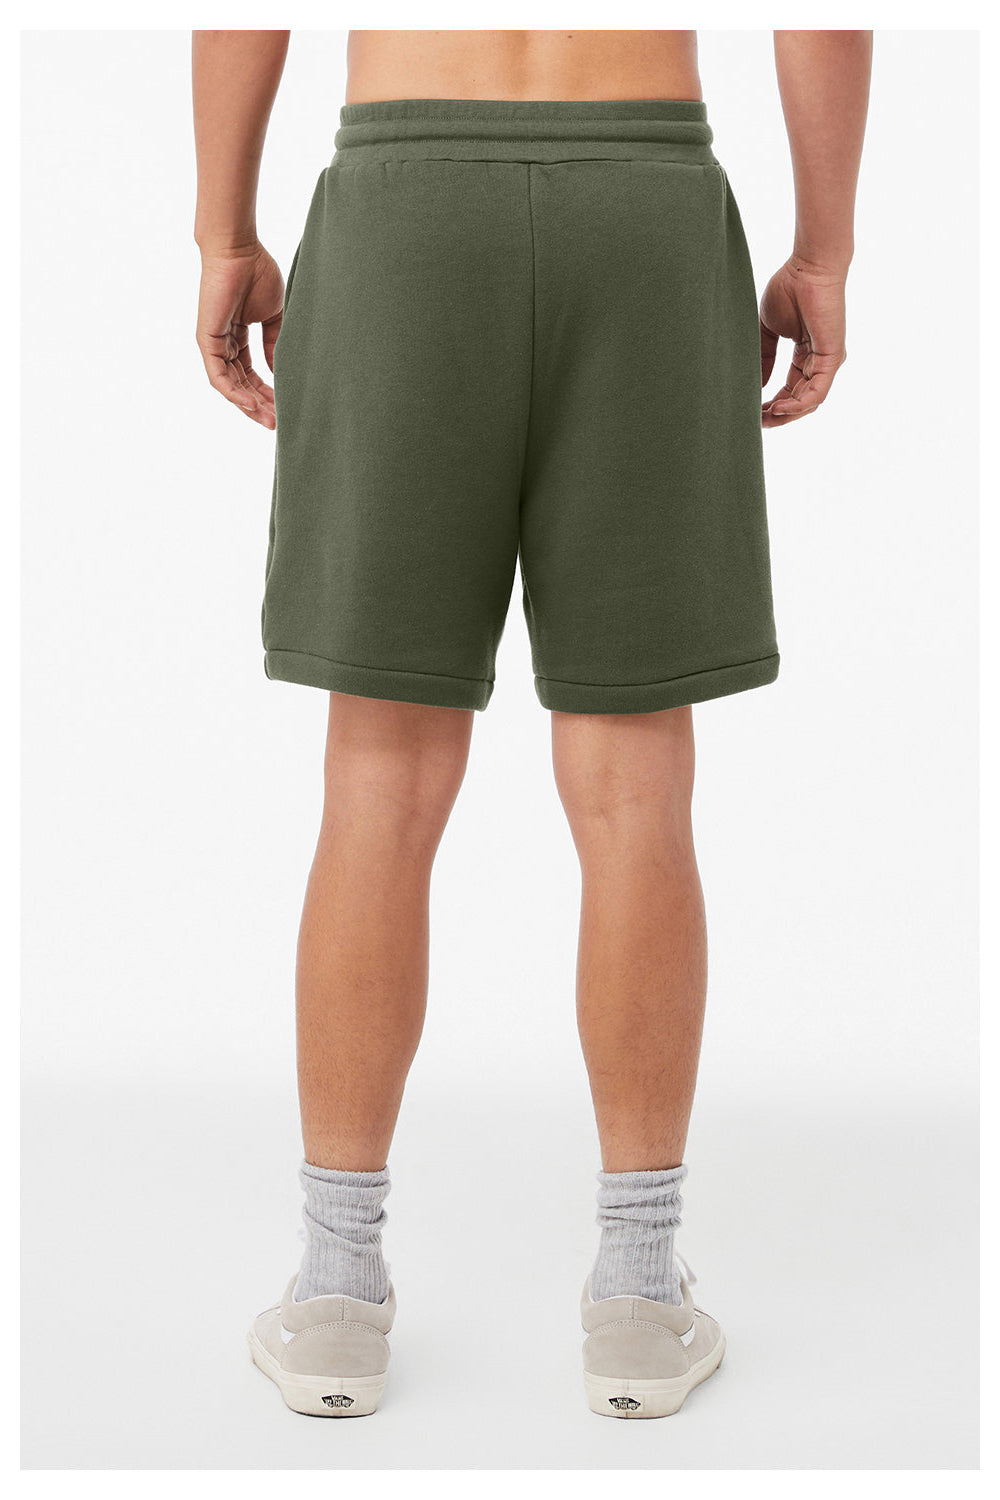 Bella + Canvas 3724 Mens Shorts w/ Pockets Military Green Model Back